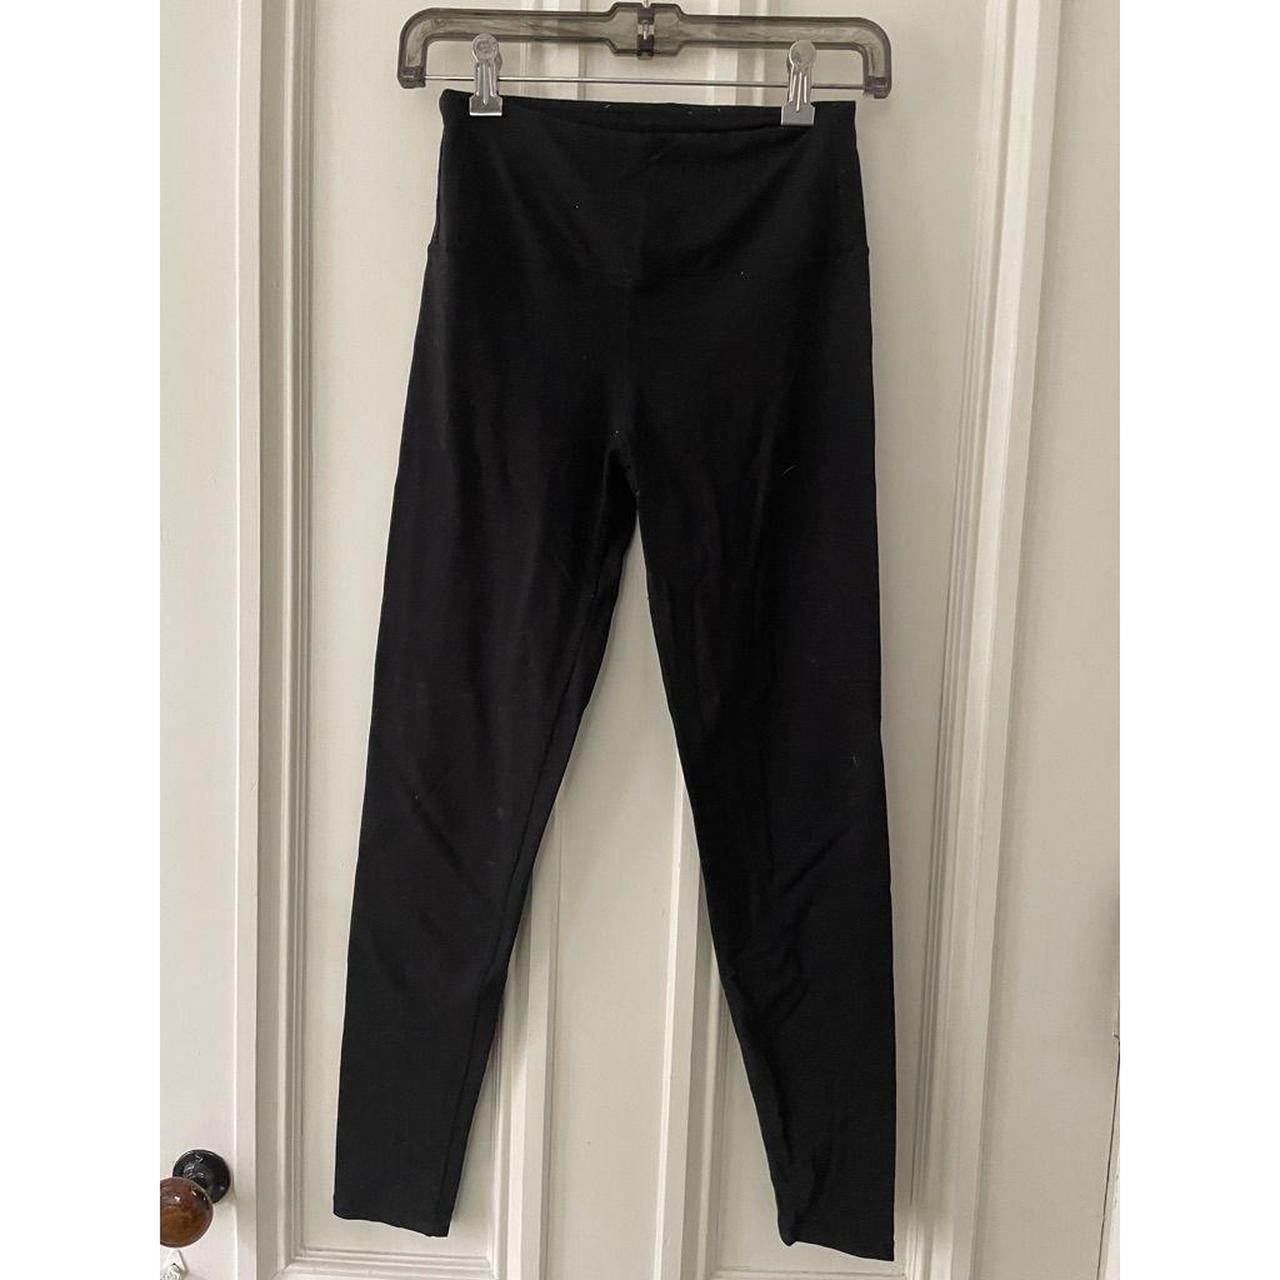 black kyodan leggings. size medium mesh detail on - Depop